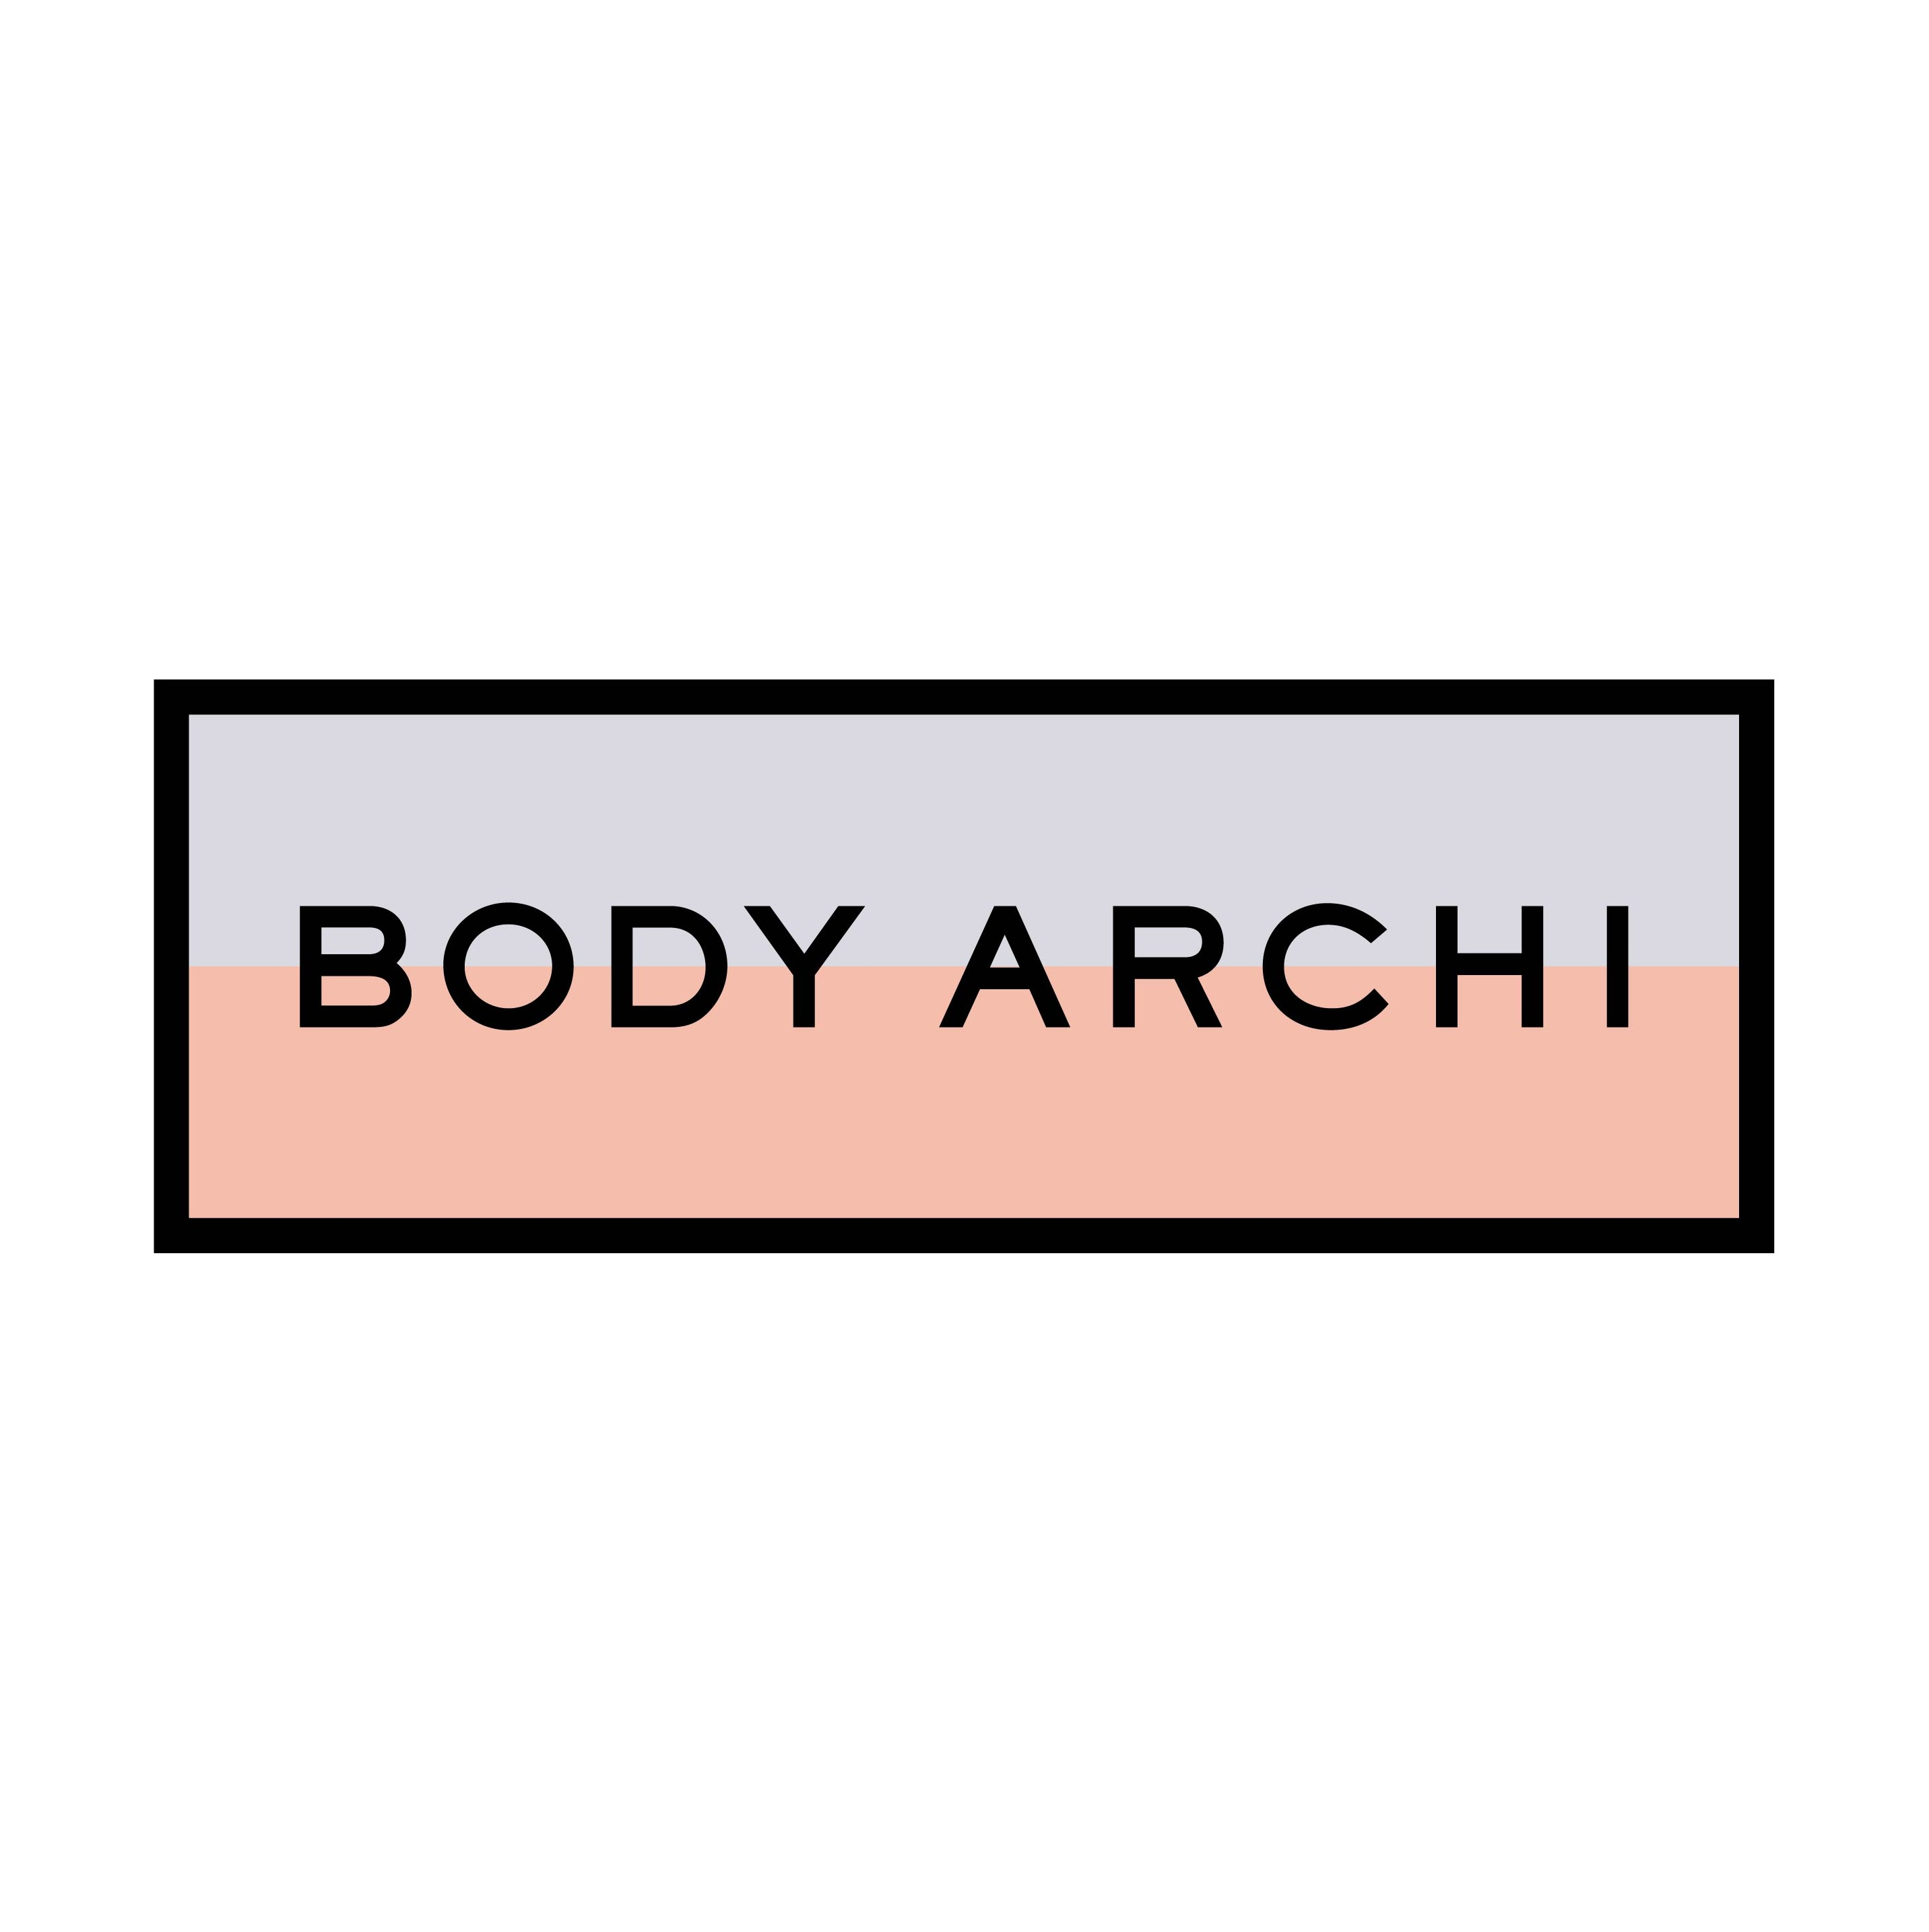 BODY ARCHI